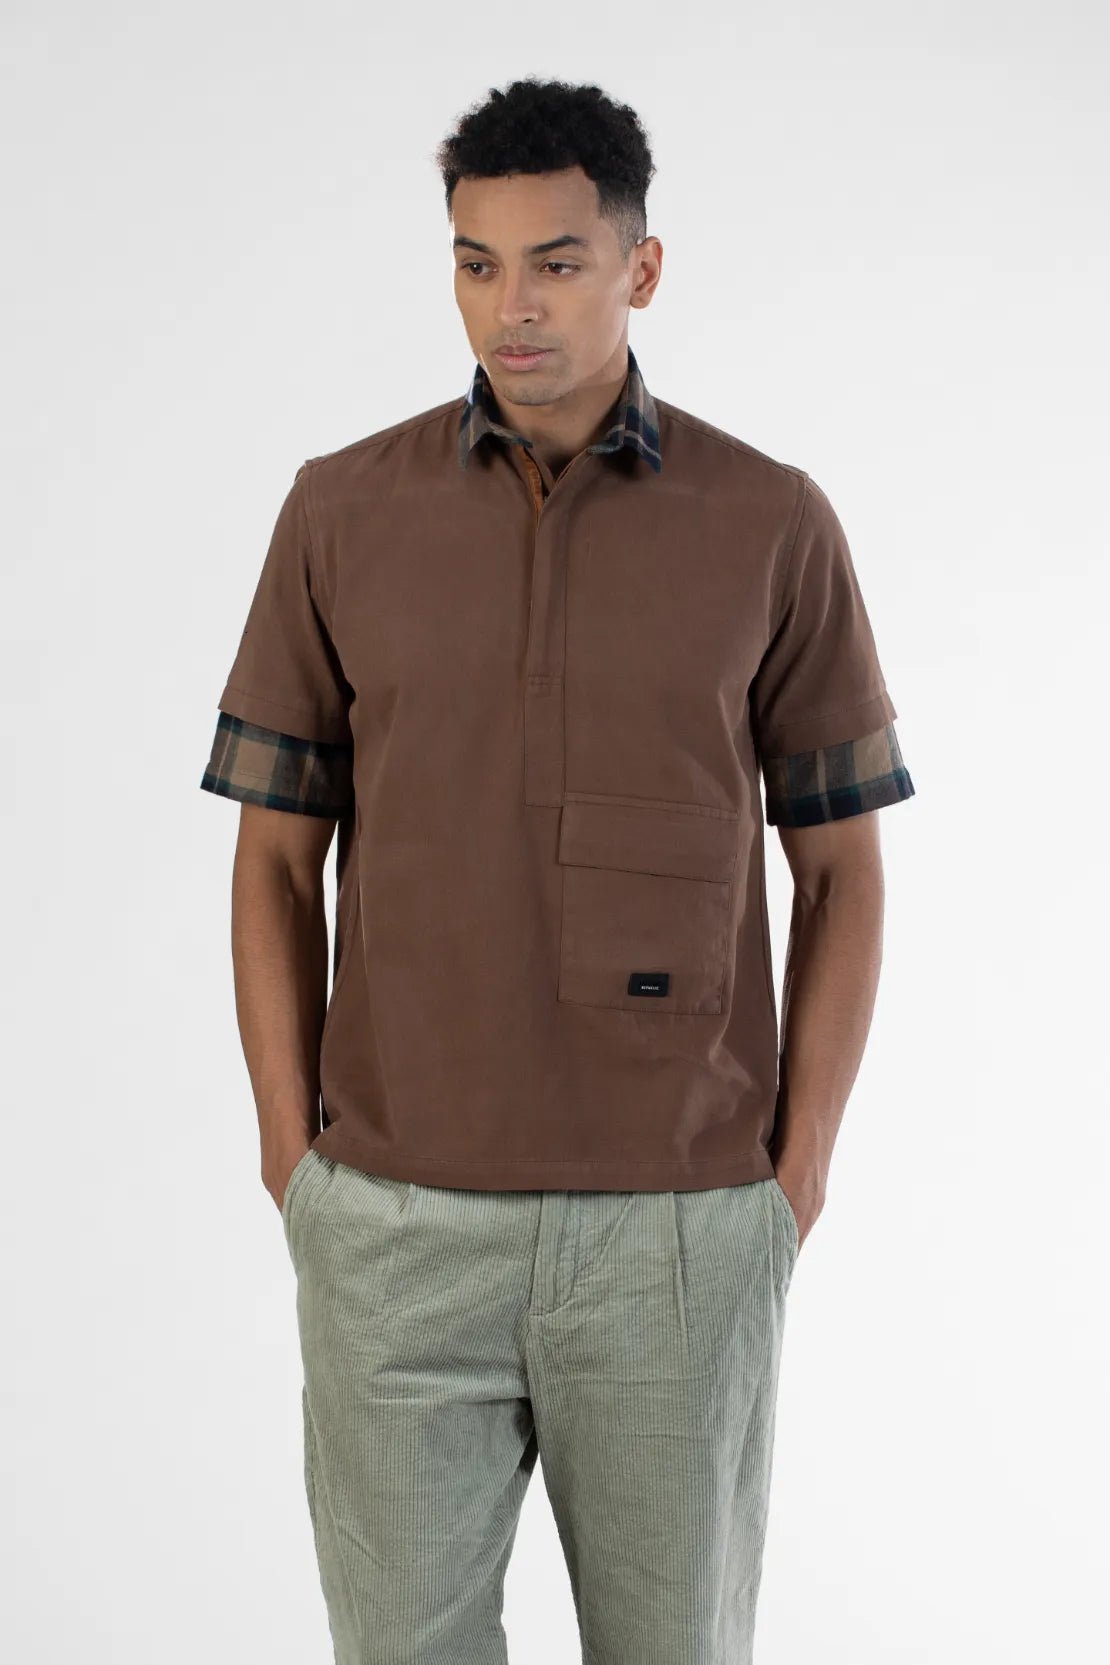 Buy Checkered Collar Twill Shirt Online.